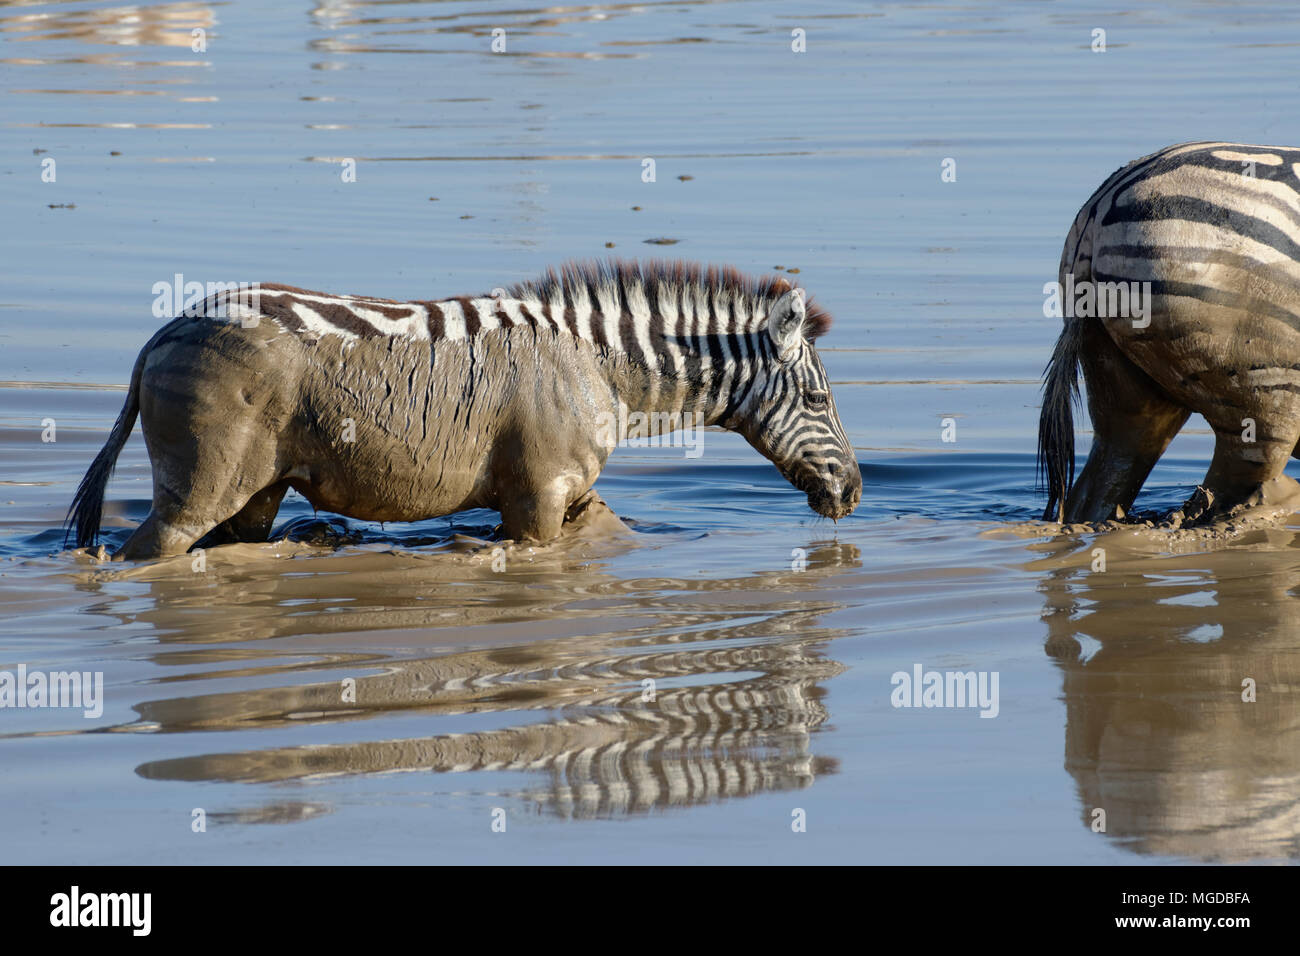 Burchell's zebras (Equus quagga burchellii) in muddy water, adult and young crossing the Okaukuejo waterhole, Etosha National Park, Namibia, Africa Stock Photo